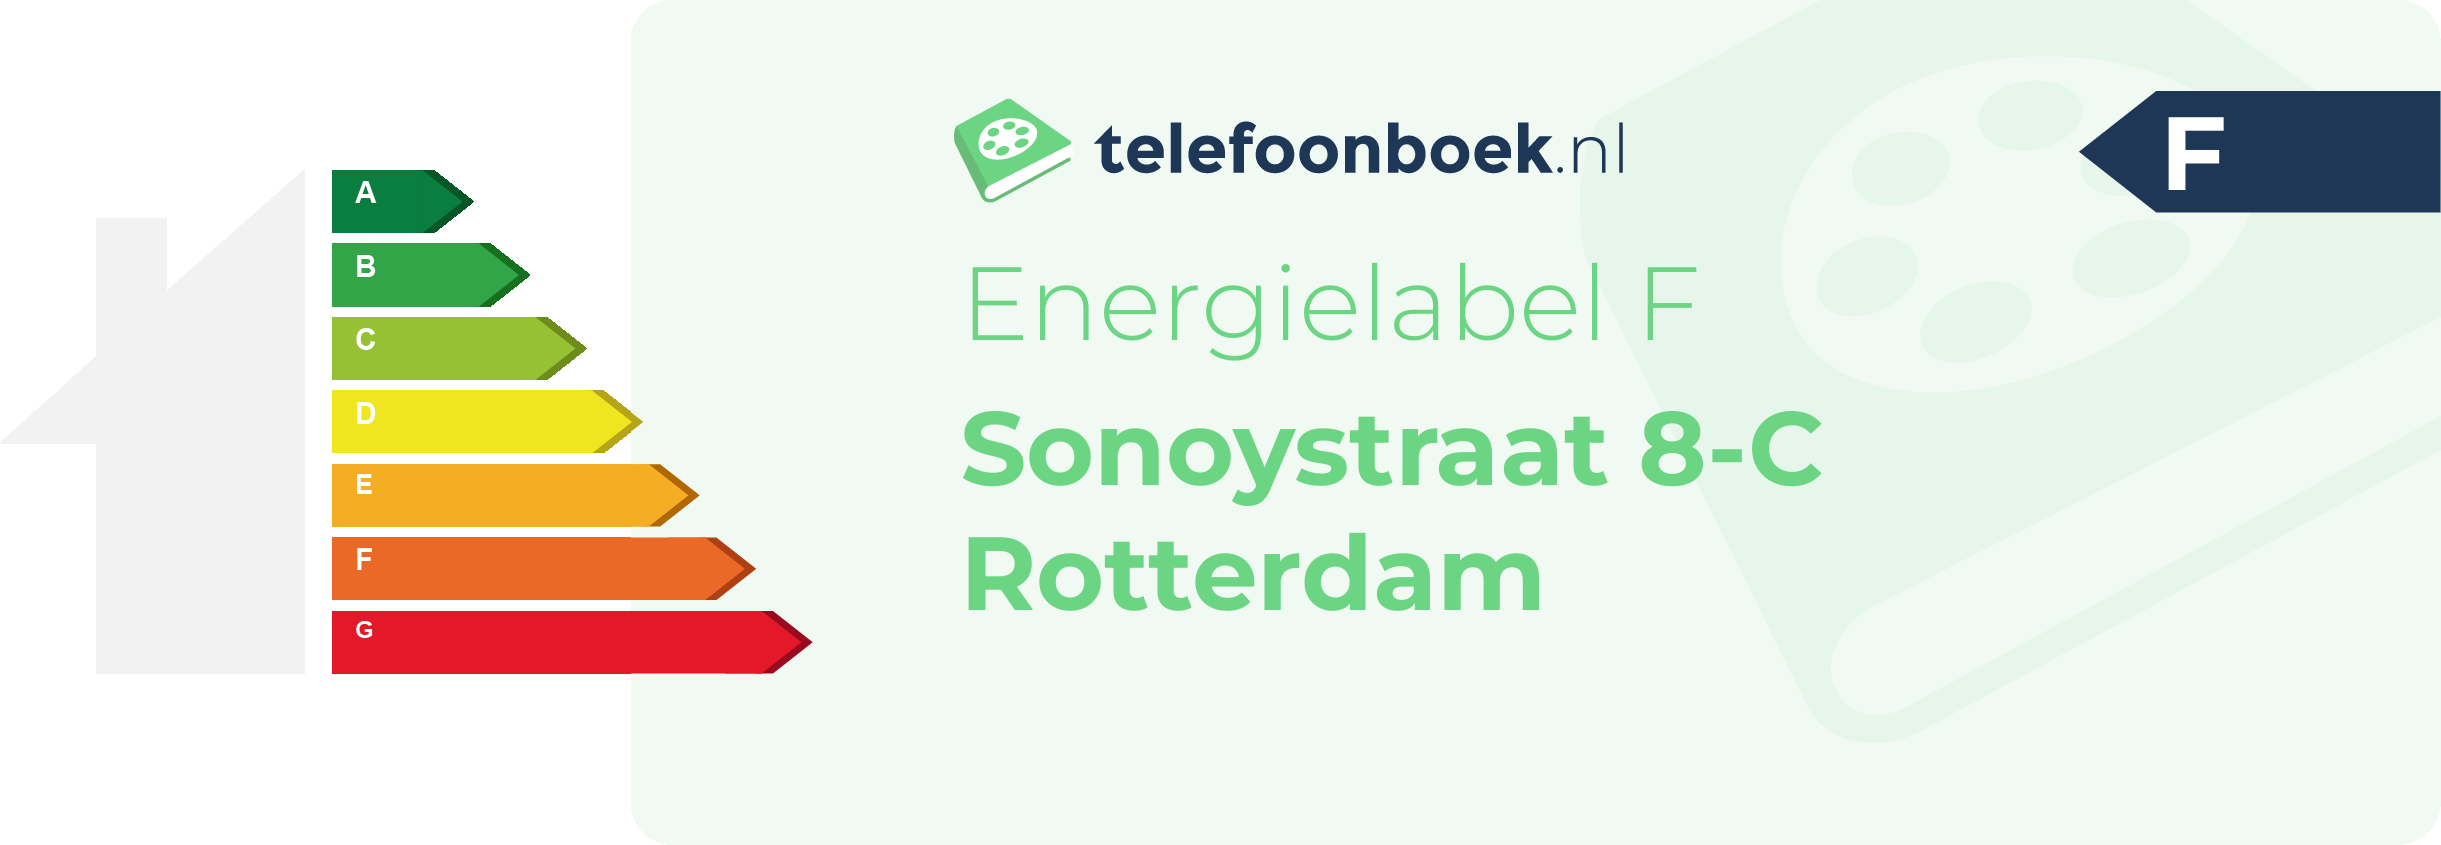 Energielabel Sonoystraat 8-C Rotterdam